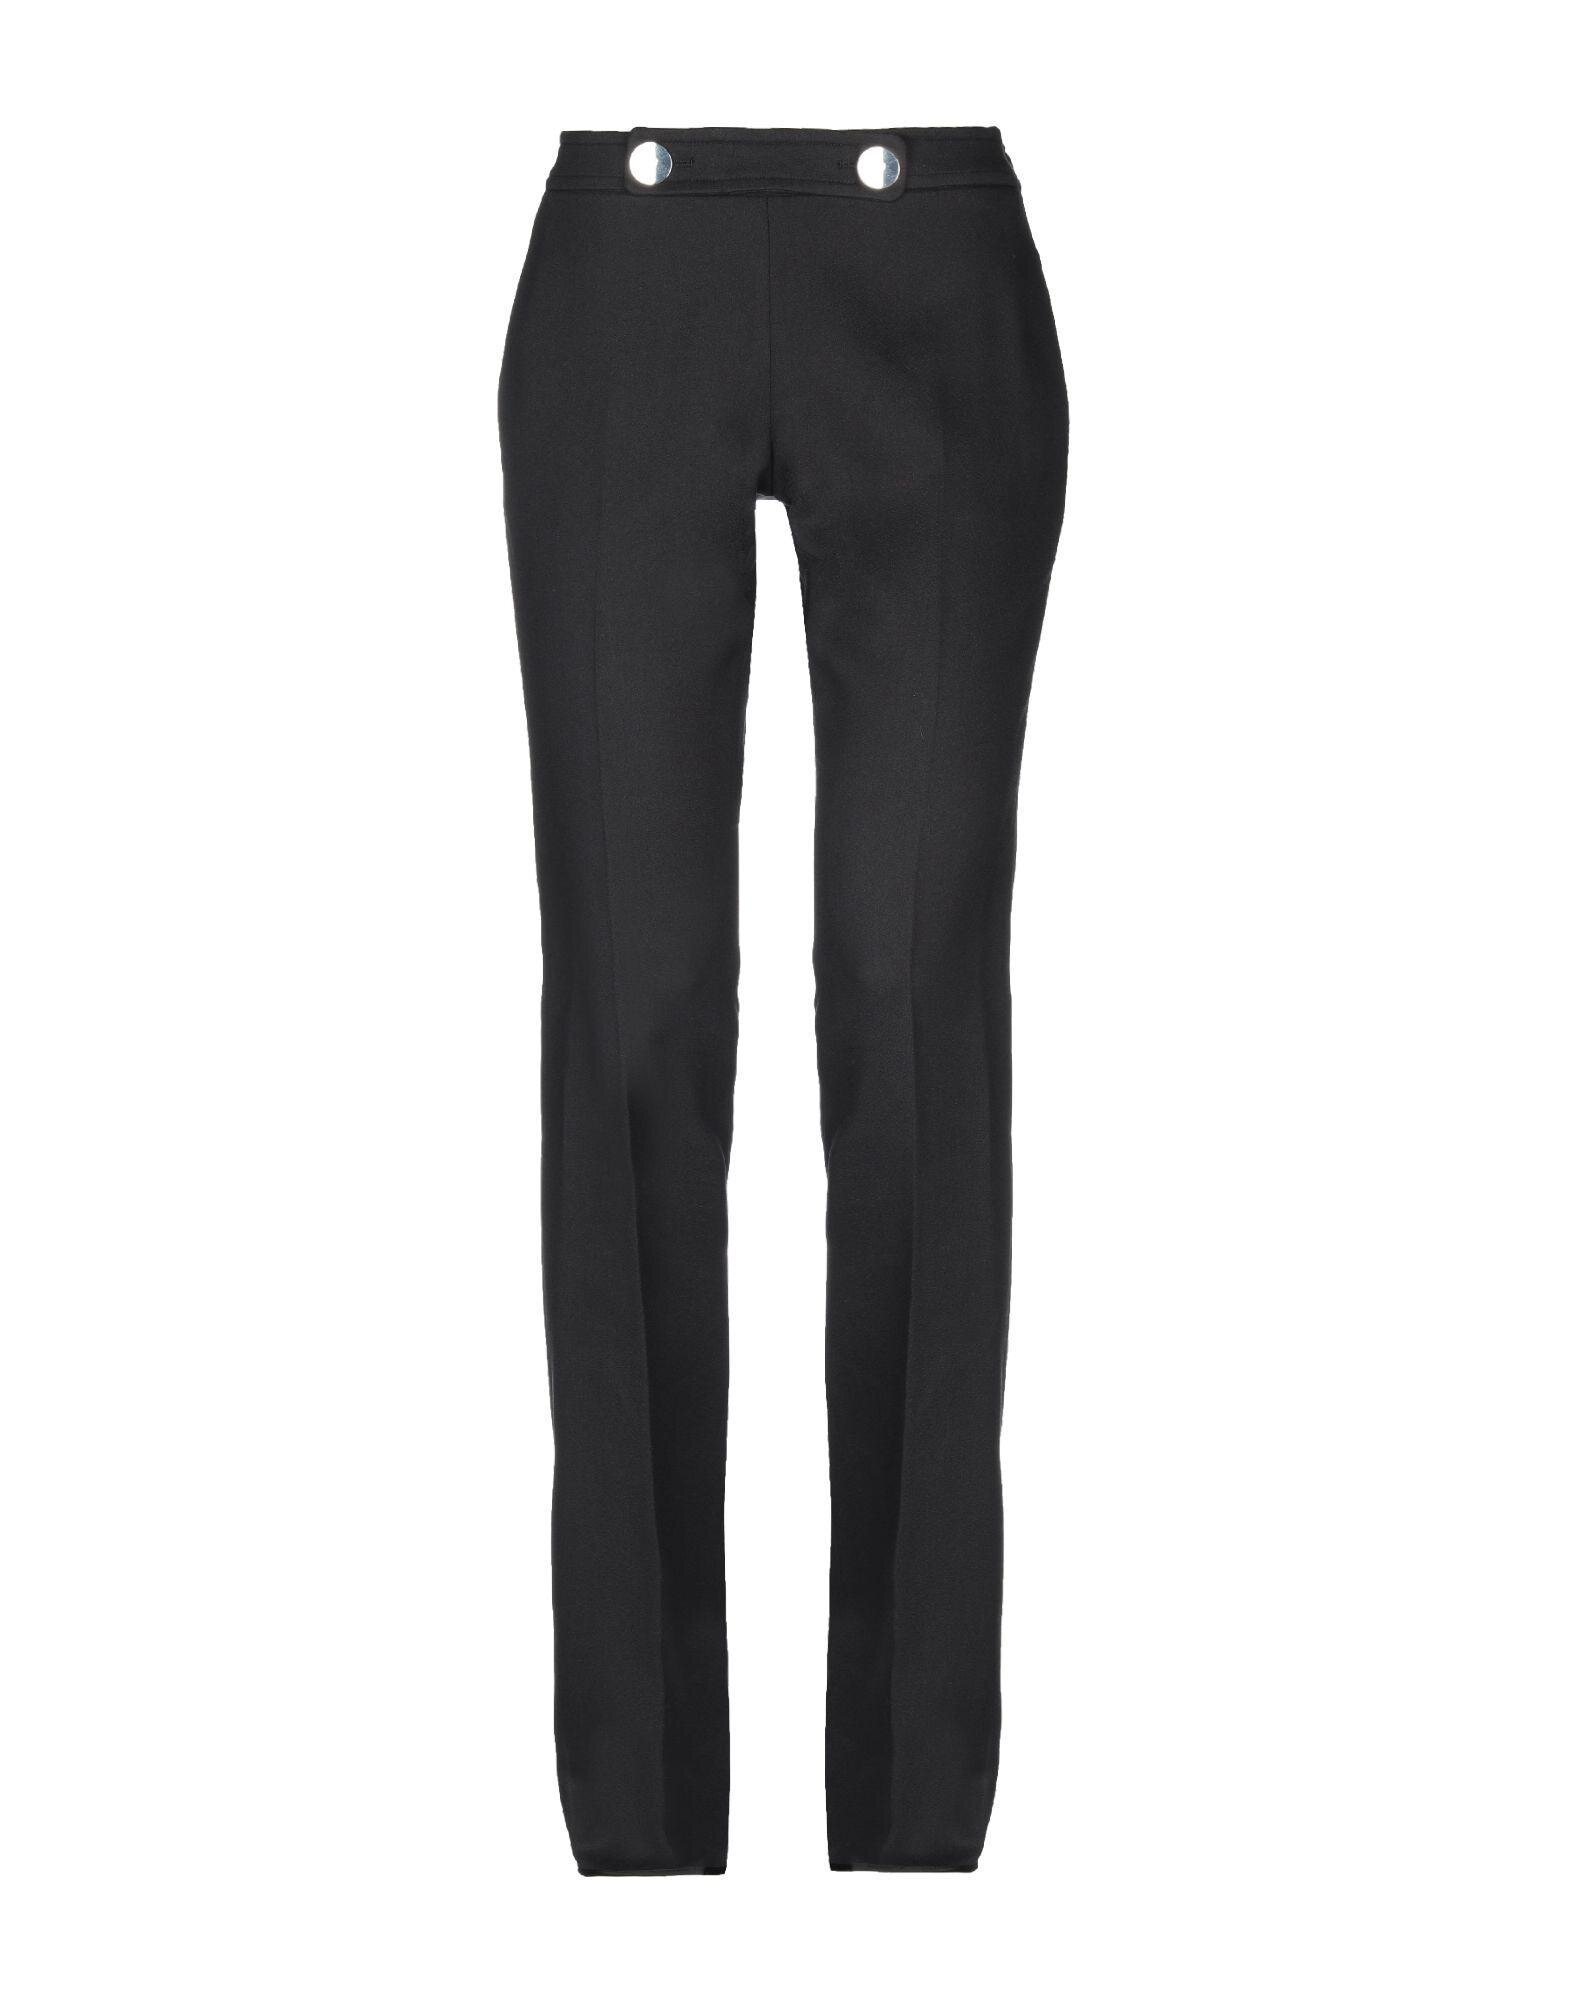 Giambattista Valli High-Waisted Crepe Trousers in Black.jpg